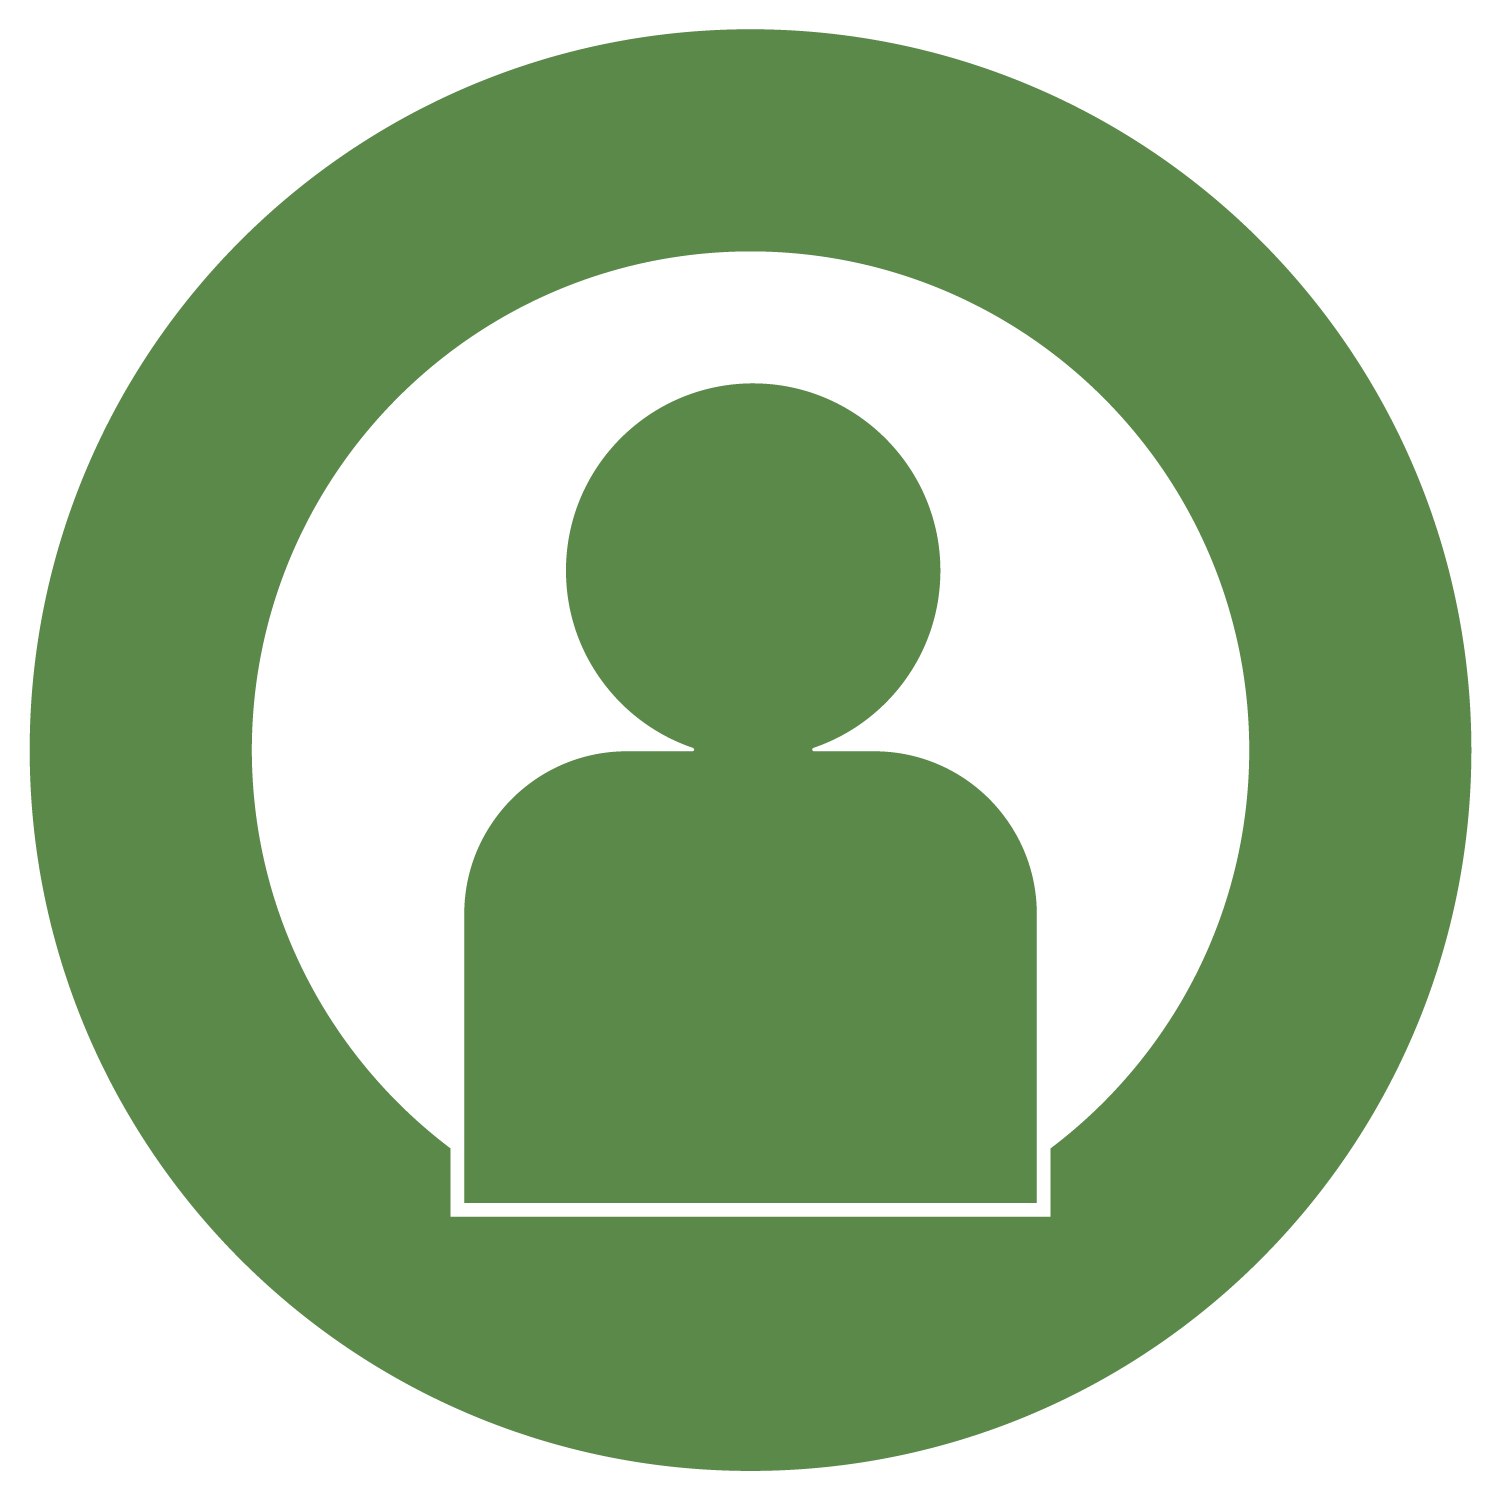  Green circle person icon